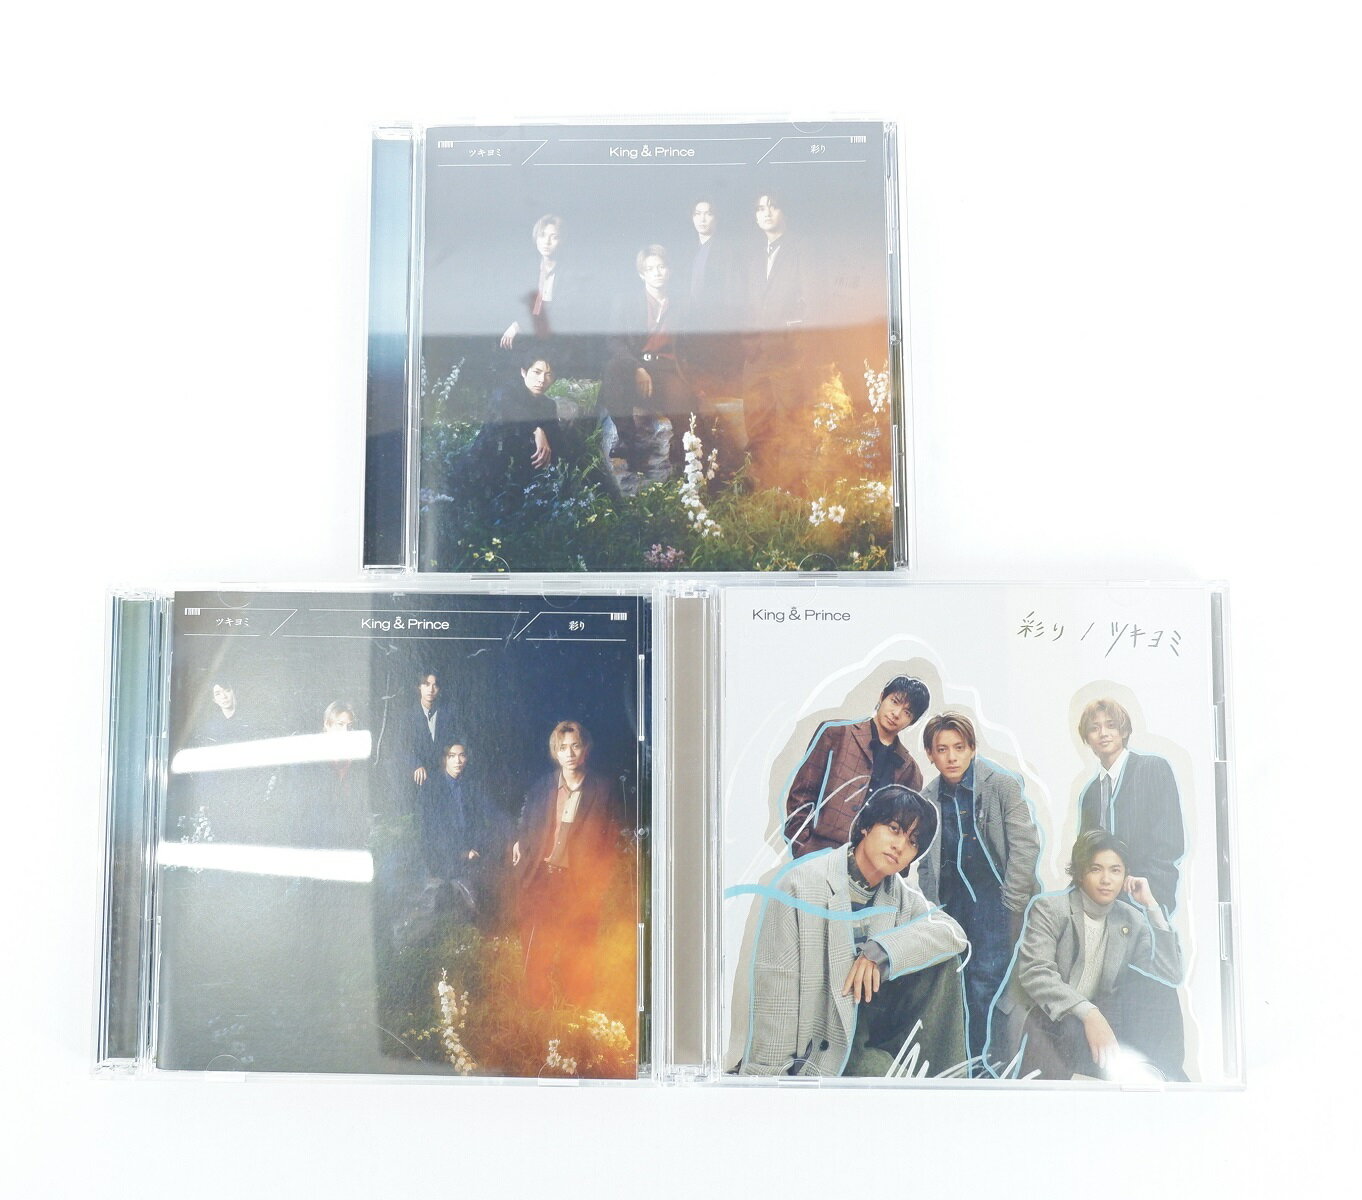 King Prince ツキヨミ / 彩り 通常盤 初回限定盤A 初回限定盤B 全3種 セット 3形態 全種 キンプリ 【CD DVD】